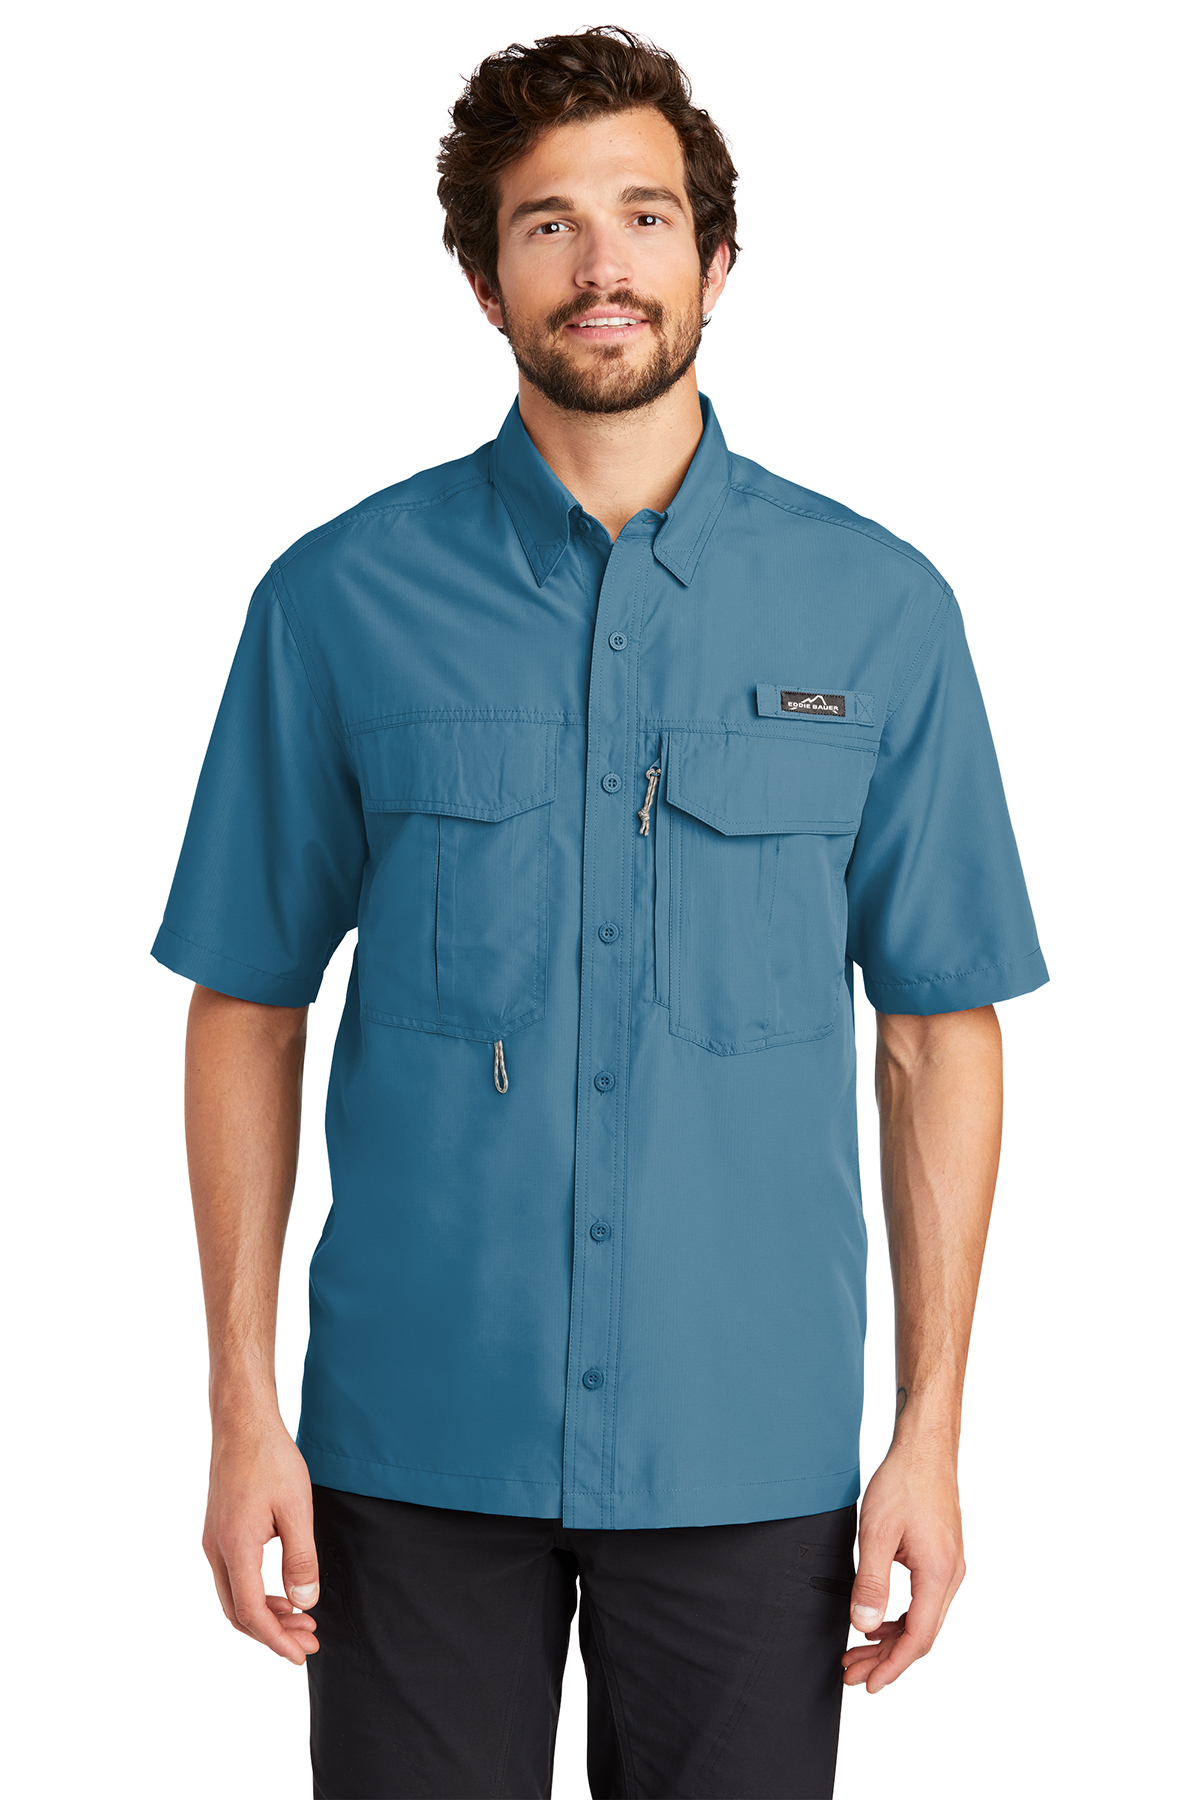 Eddie Bauer - Short Sleeve Performance Fishing Shirt | Product ...